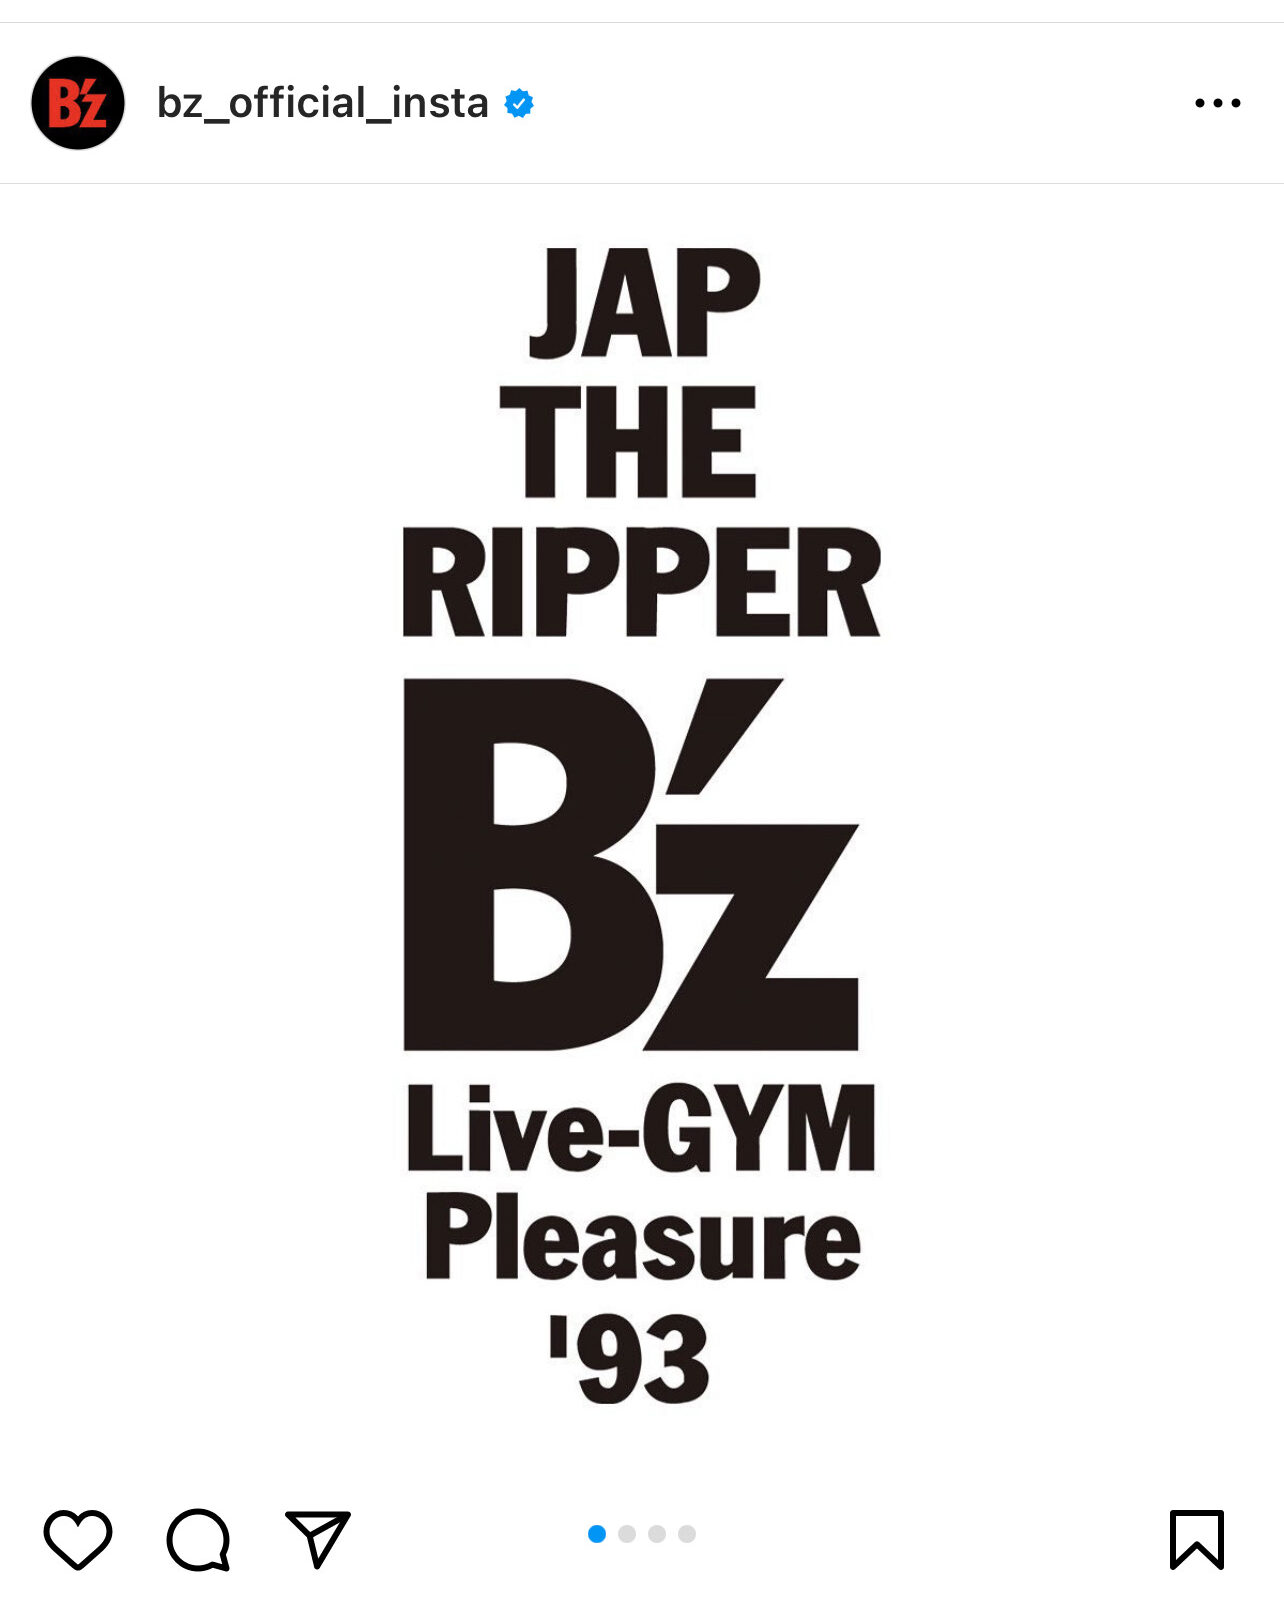 B'zデビュー35周年記念で公開された『B'z LIVE-GYM Pleasure '93 “JAP THE RIPPER” 』のツアーロゴ画像